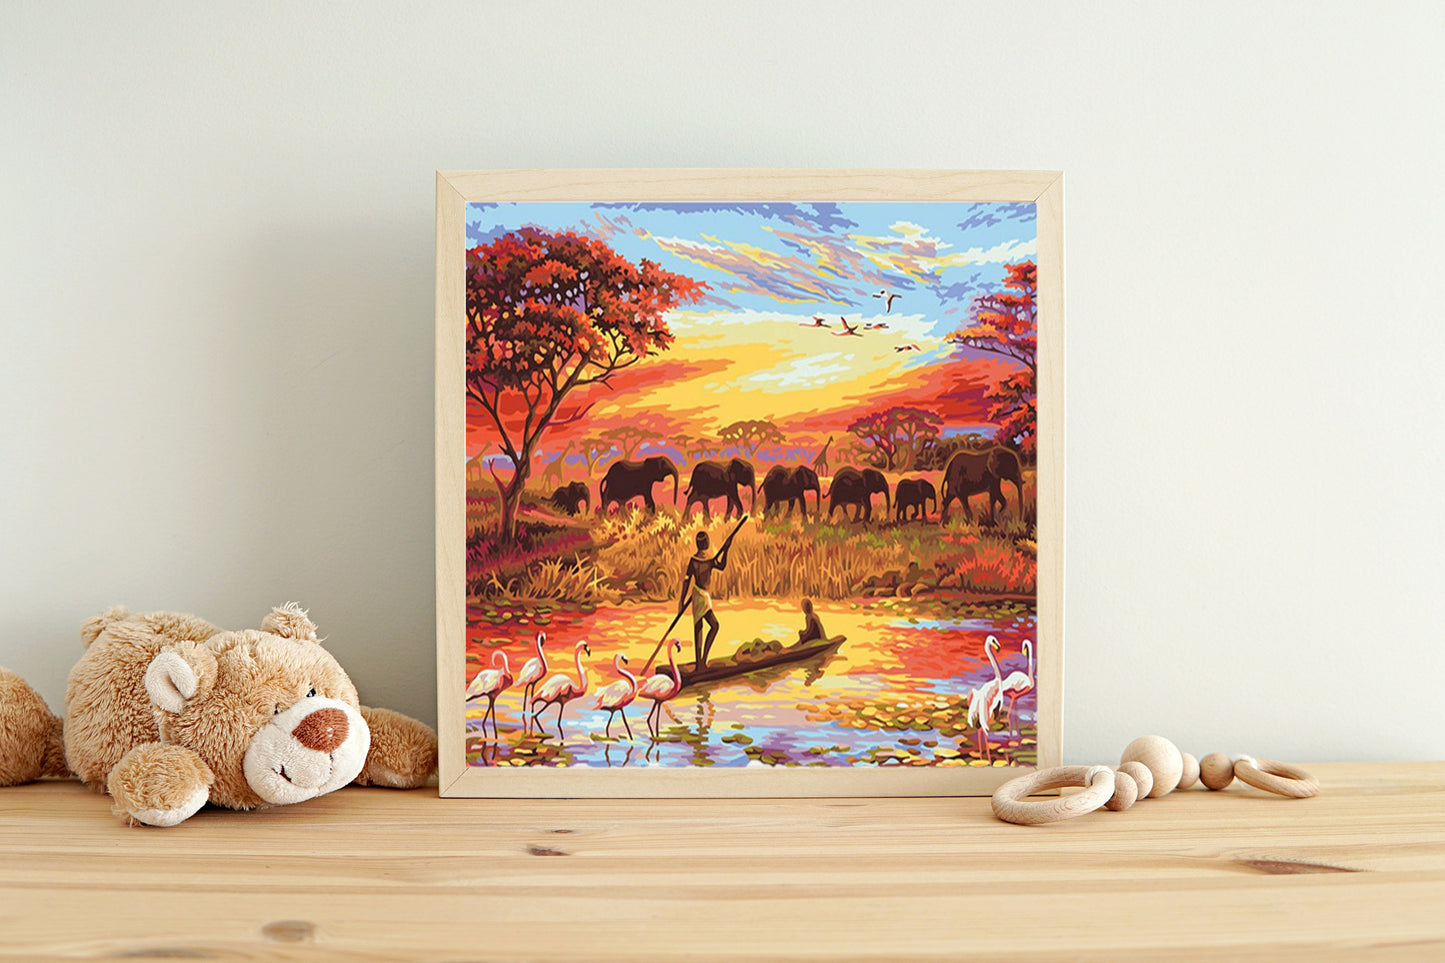 Malen nach Zahlen Erwachsene Steppe Afrika 40x50 cm Paint by Numbers DIY Öl Acryl Leinwand Bild Dekoration Elefanten Tiere ohne Rahmen 1 Stück